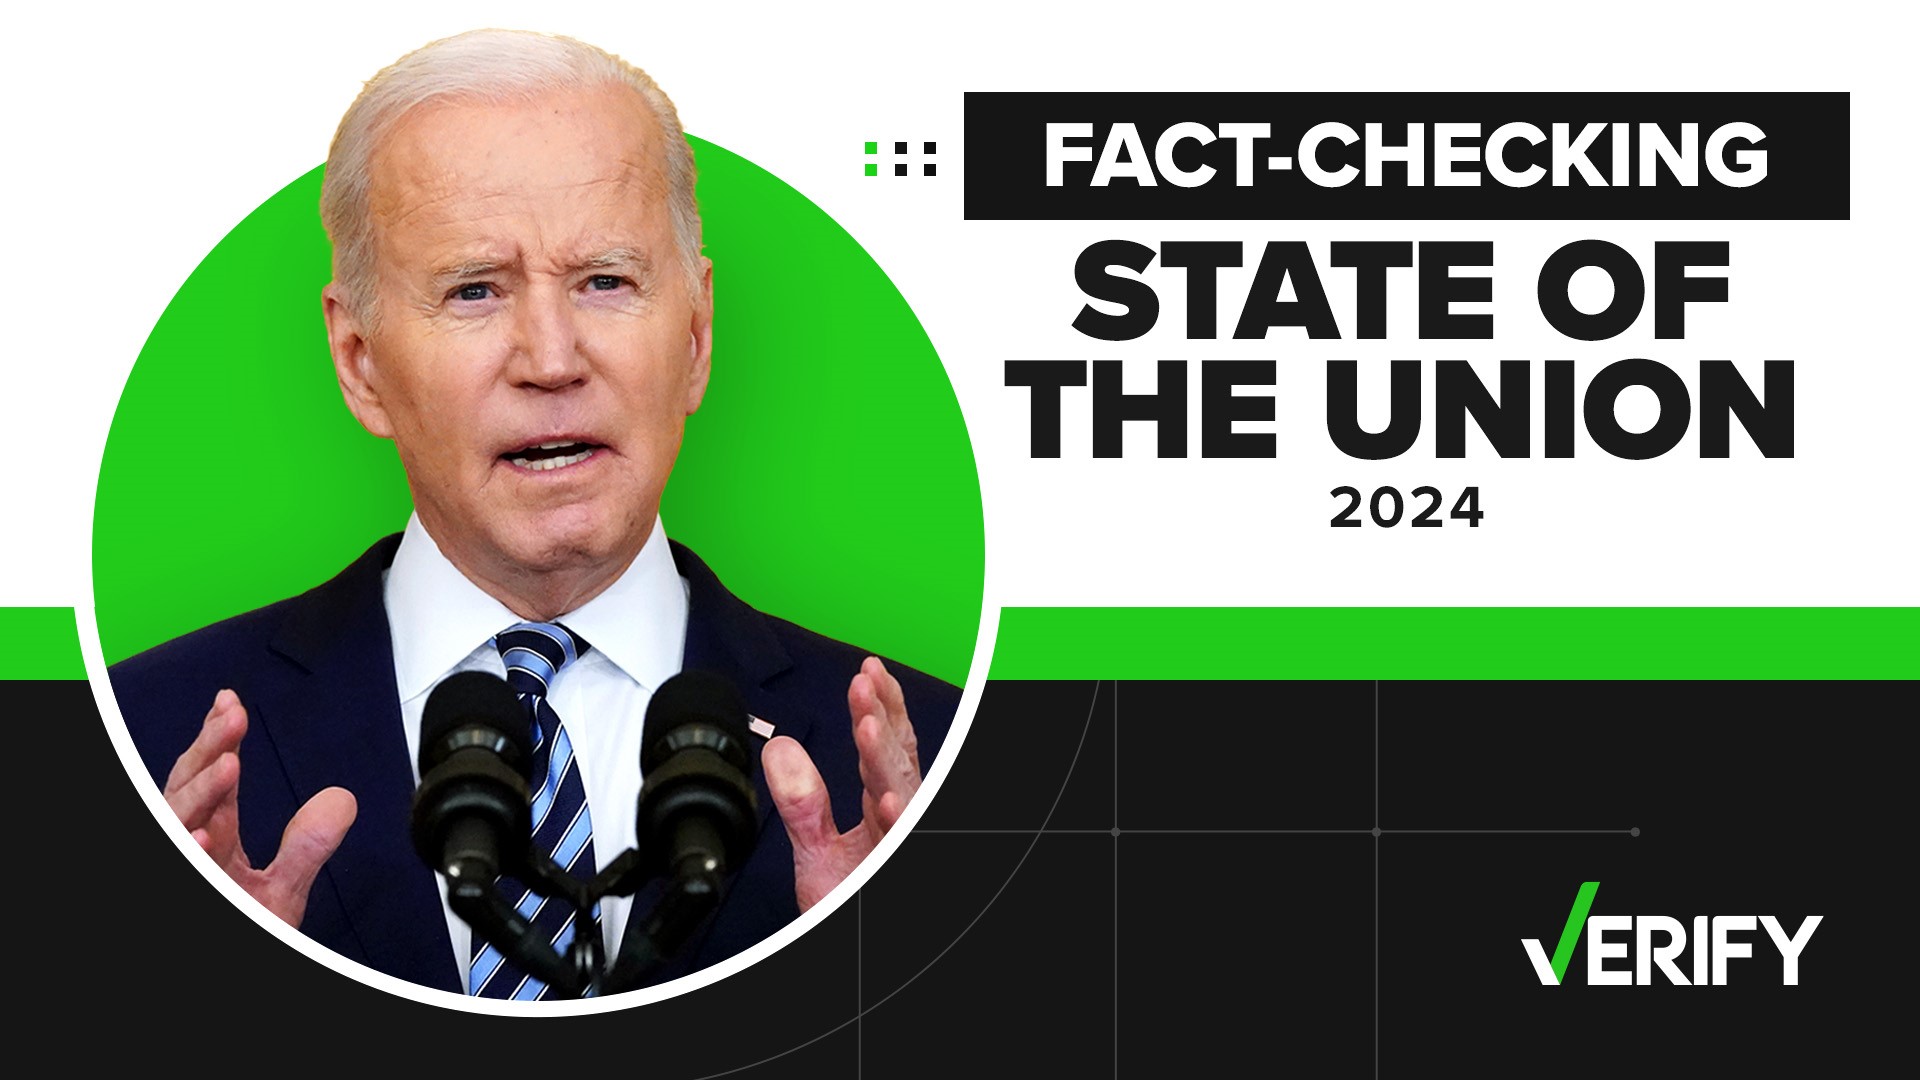 President Biden State of the Union 2024 factcheck